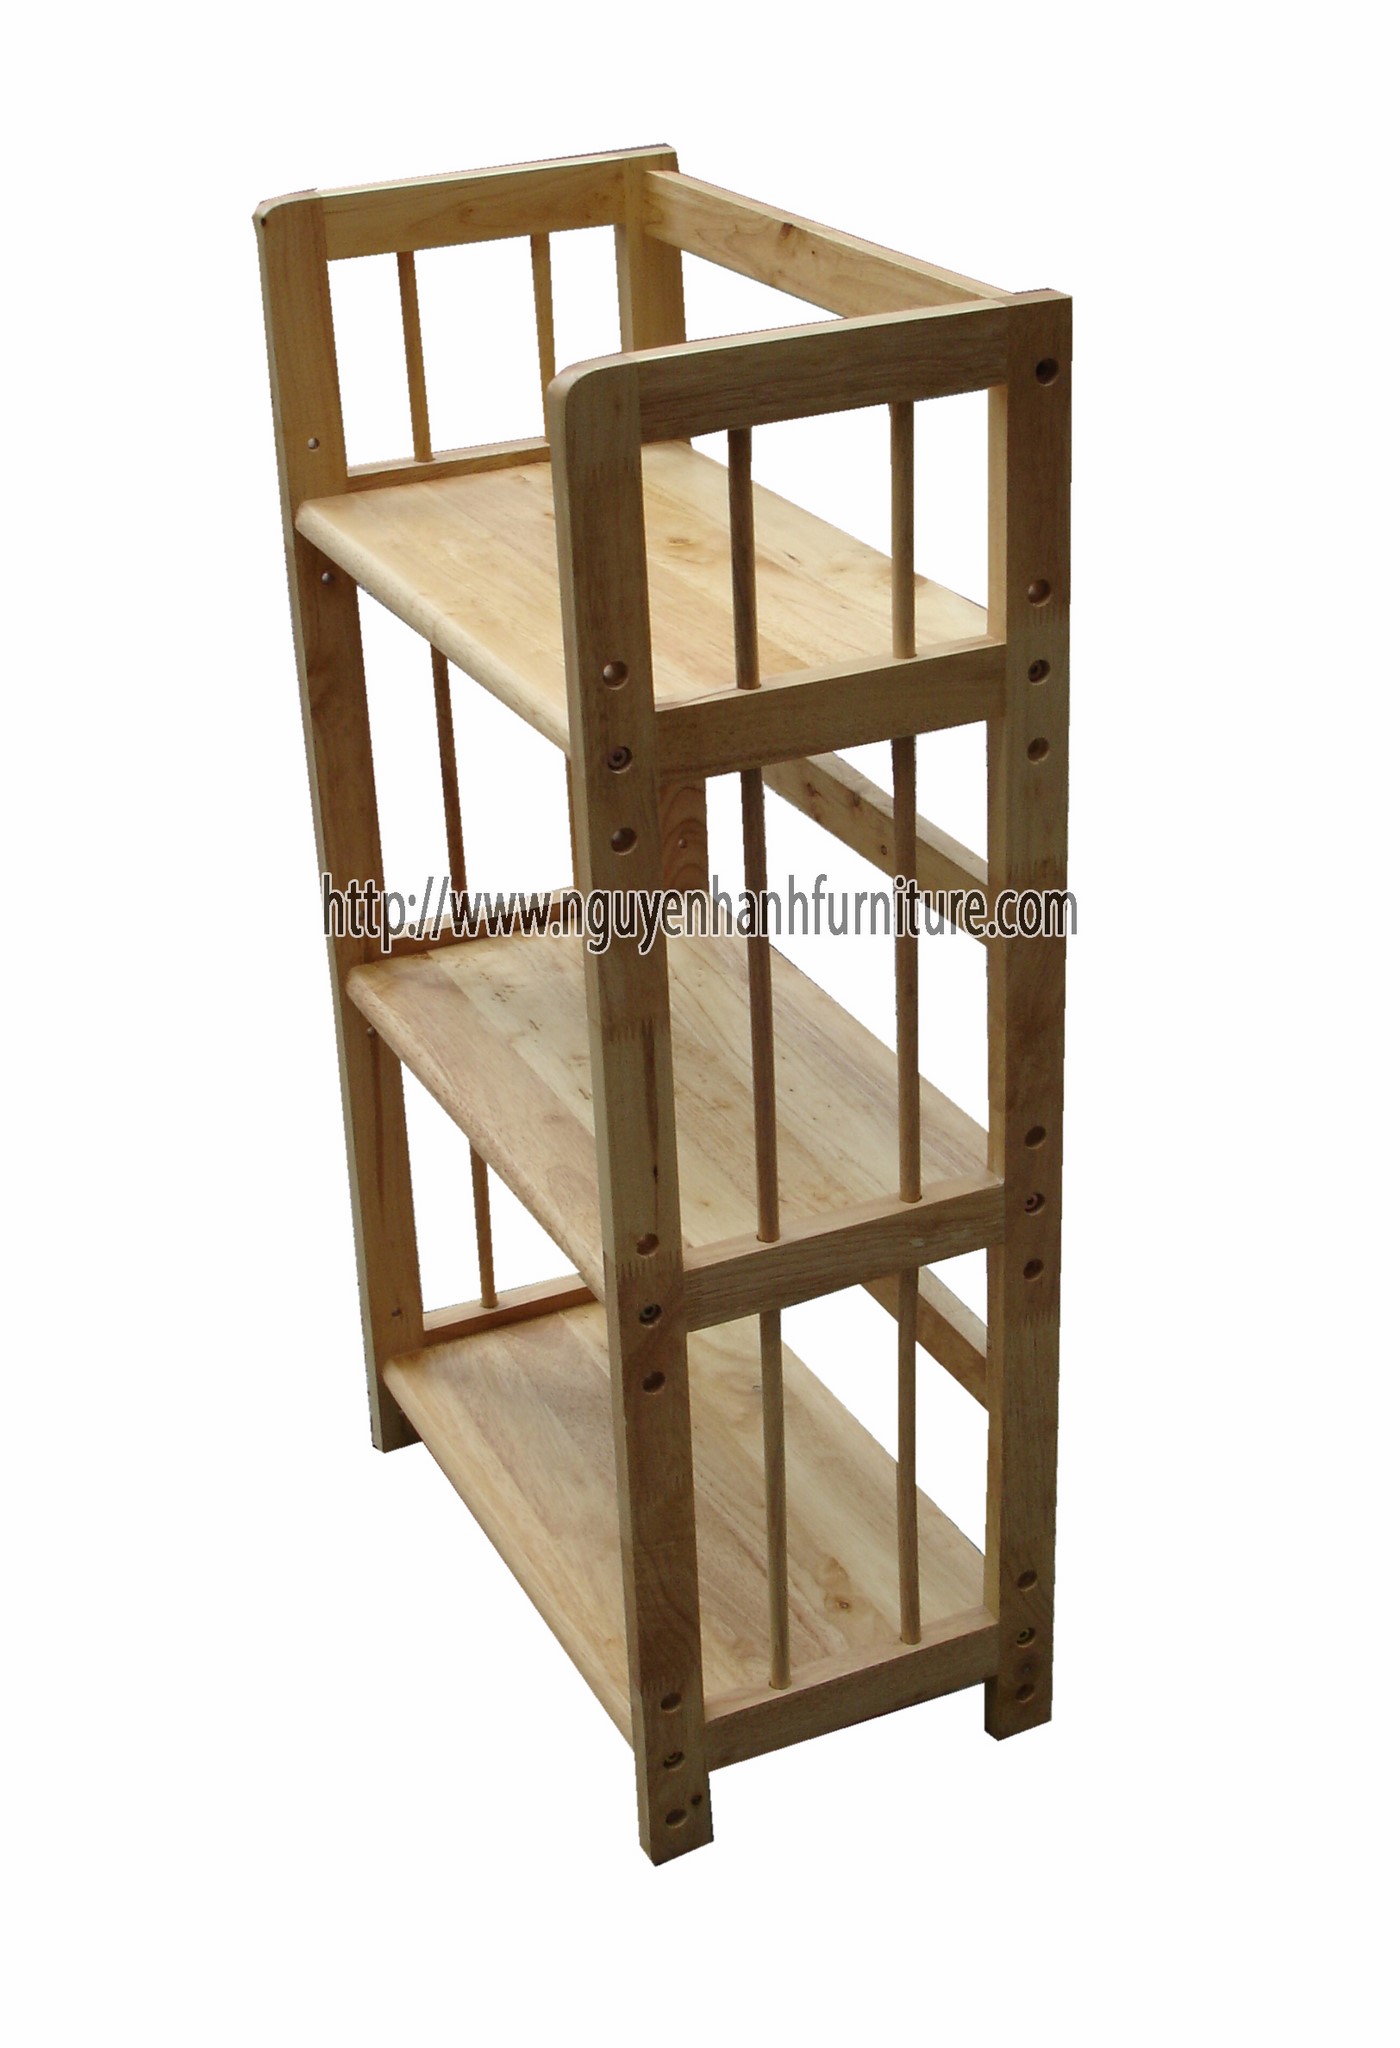 Name product: Triple storey Adjustable Bookshelf 50 (Natural) - Dimensions: 50 x 28 x 90 (H) - Description: Wood natural rubber